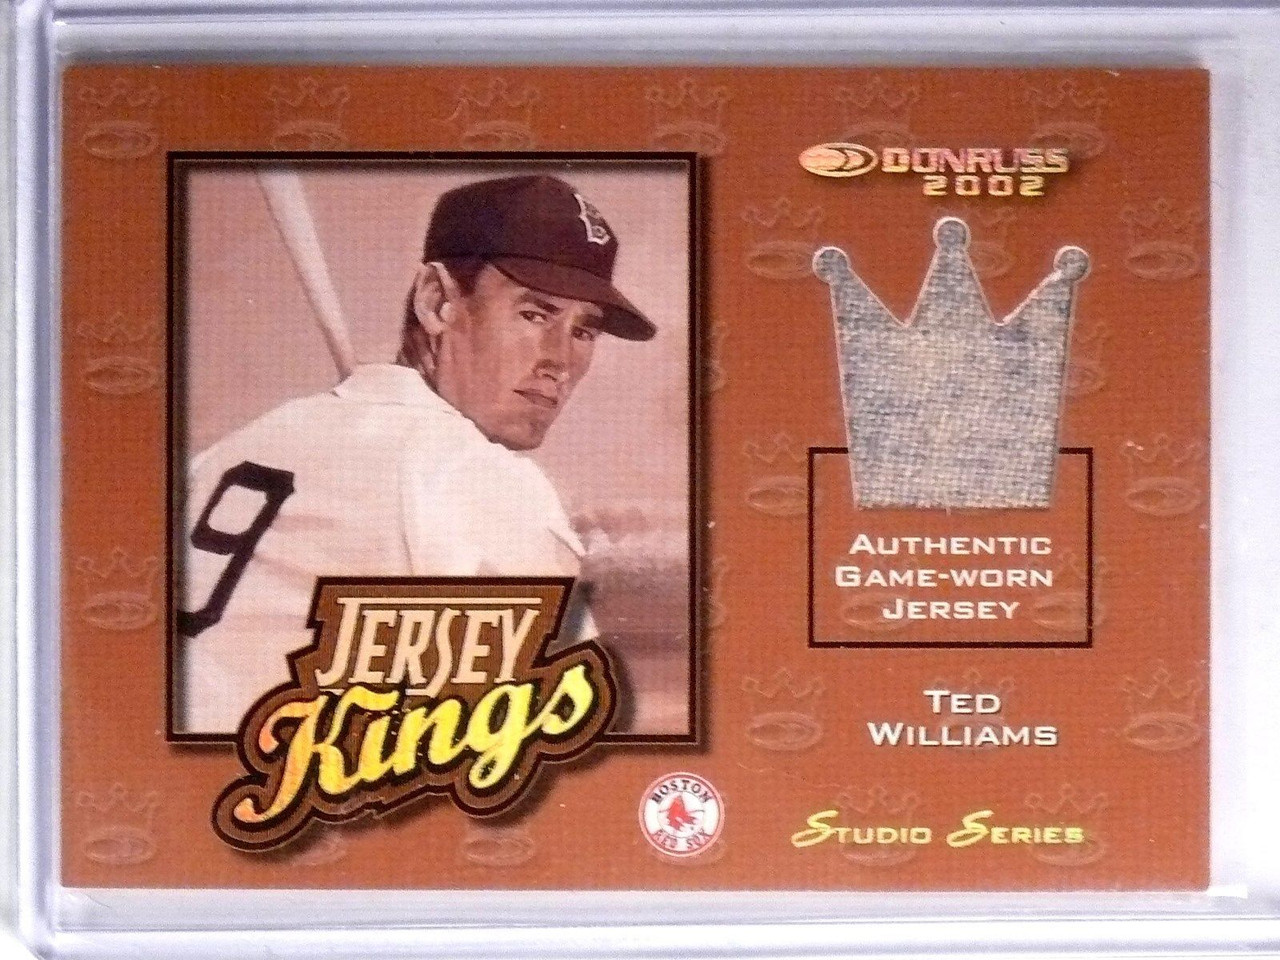 2002 Donruss Jersey Kings Studio Series Ted Williams jersey #D09/25 #Jk-14  - Sportsnut Cards